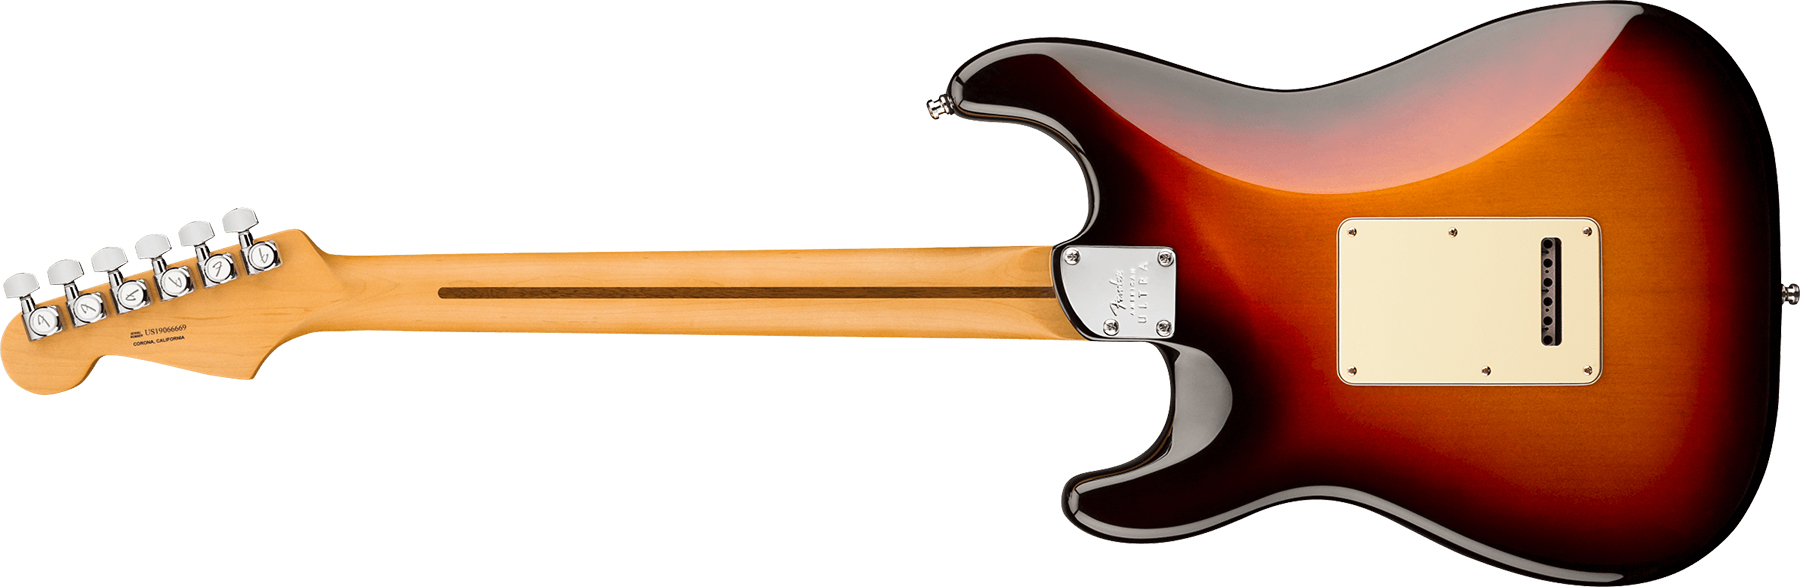 Fender Strat American Ultra Hss 2019 Usa Mn - Ultraburst - Guitare Électrique Forme Str - Variation 1